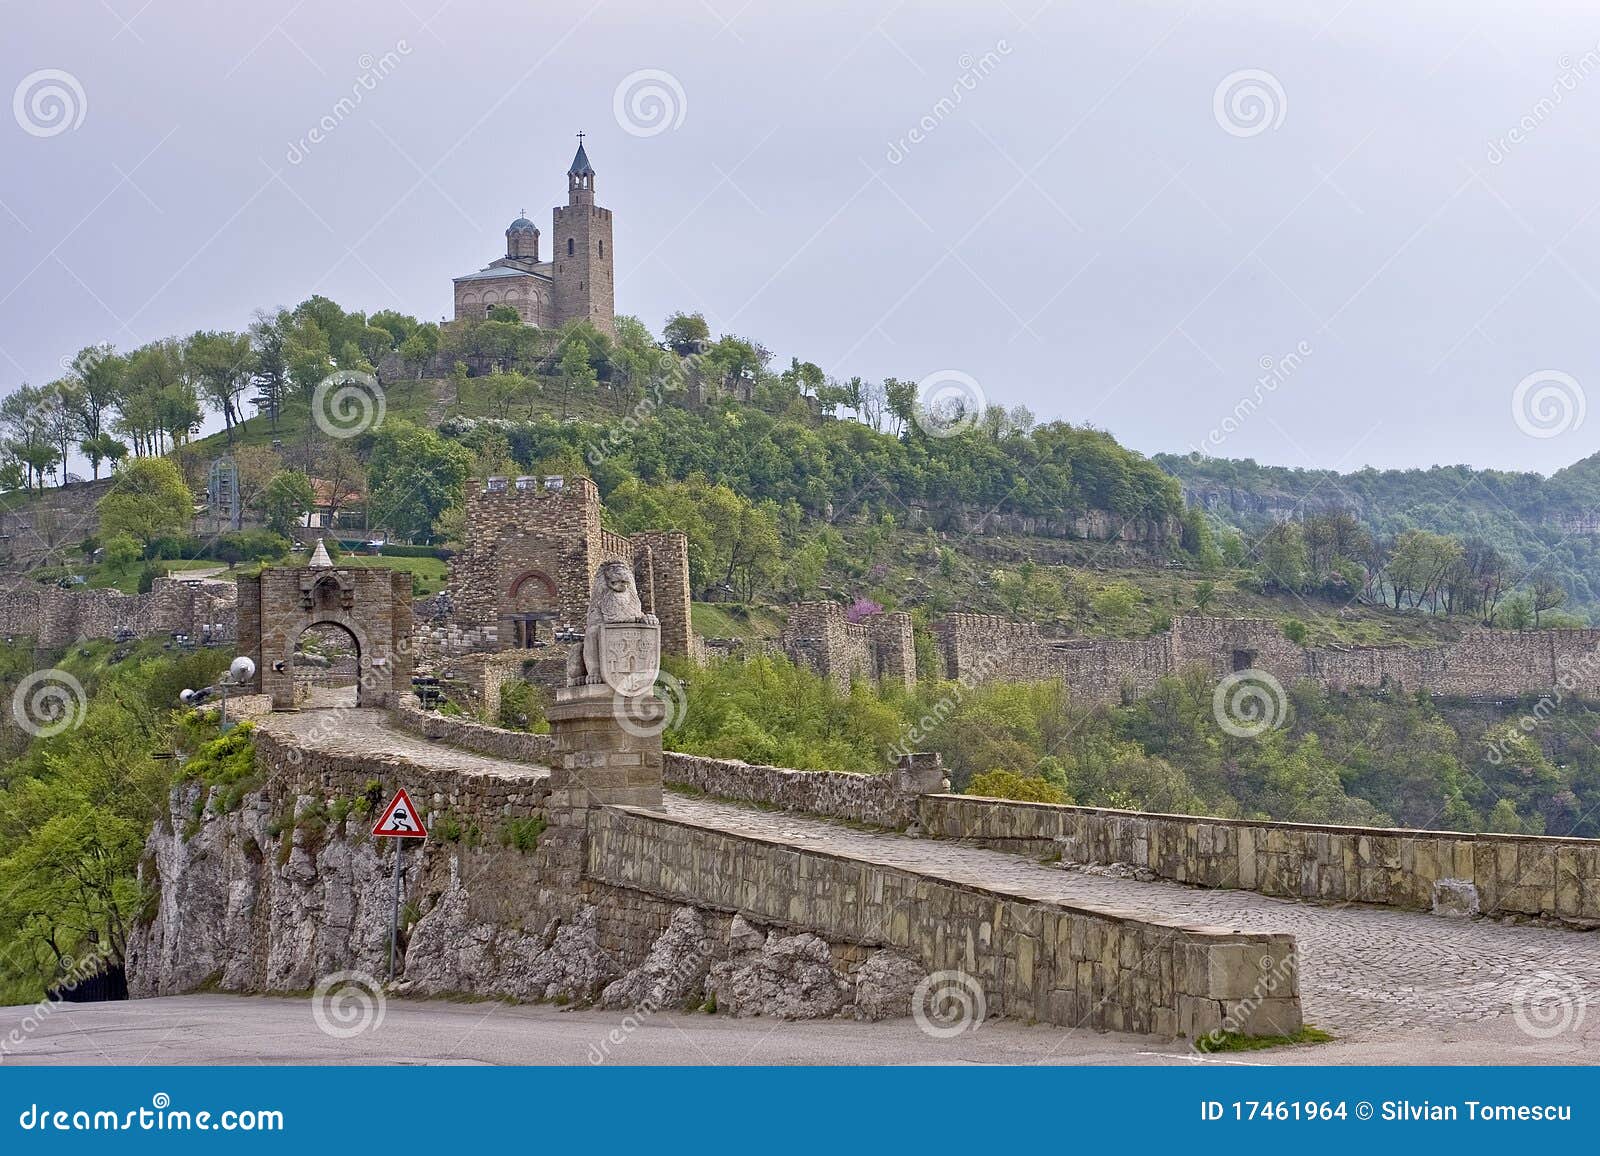 Veliko Tarnovo Old Citadel Tower Stock Photo - Image of summer, tourism ...